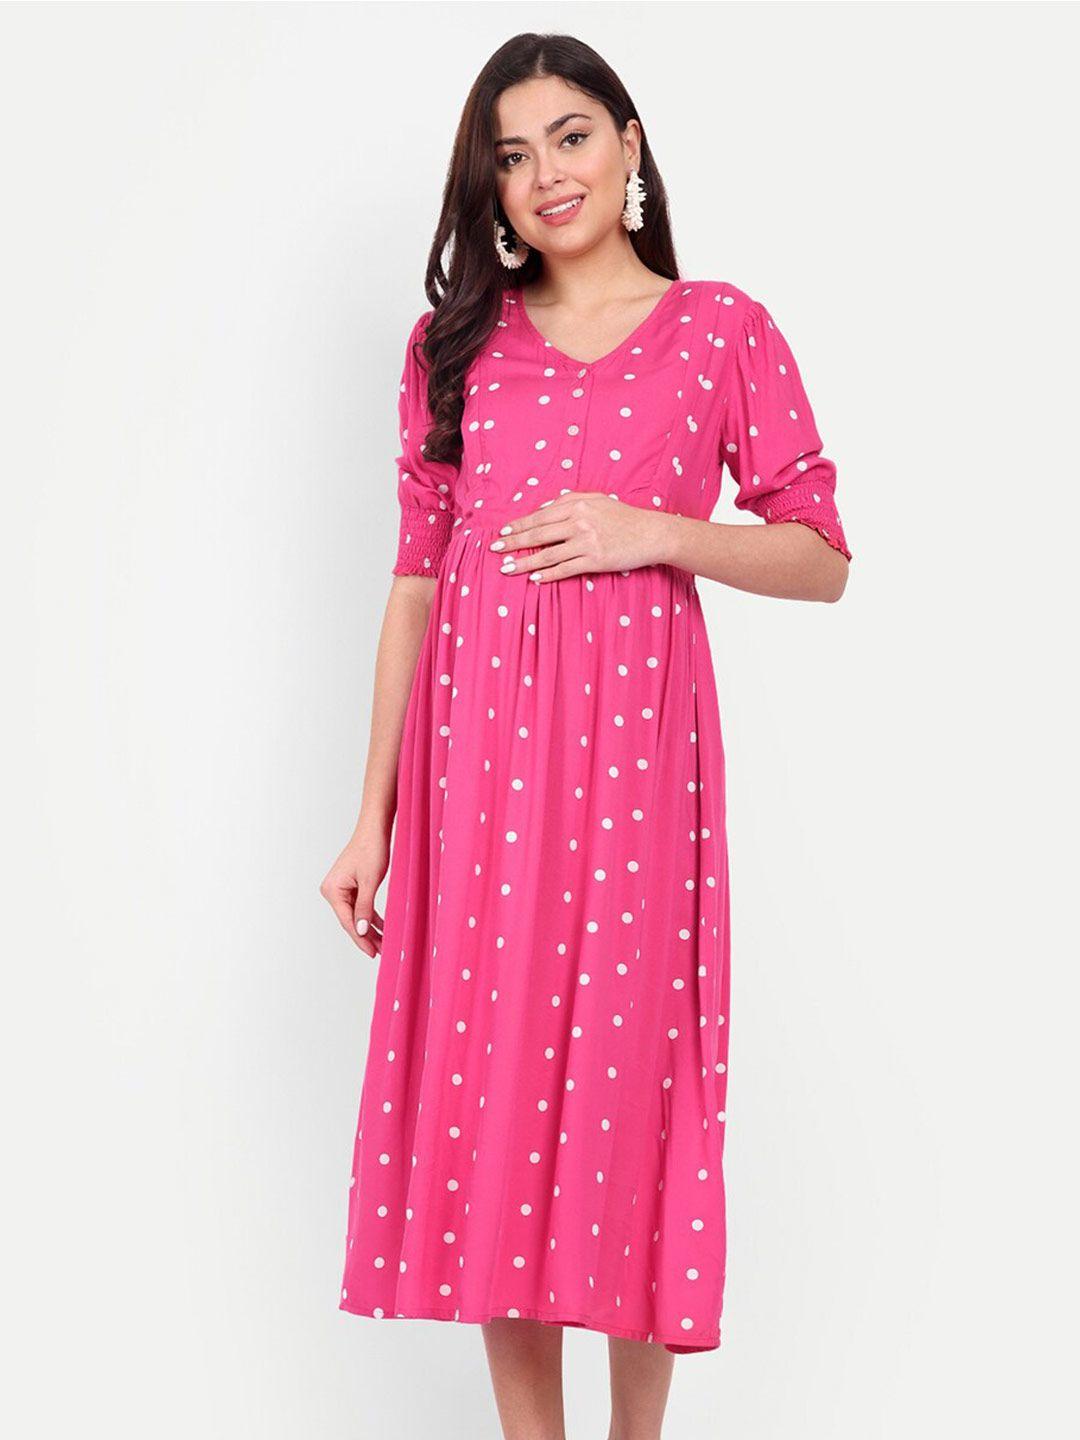 aaruvi-ruchi-verma-polka-dots-printed-maternity-a-line-midi-dress